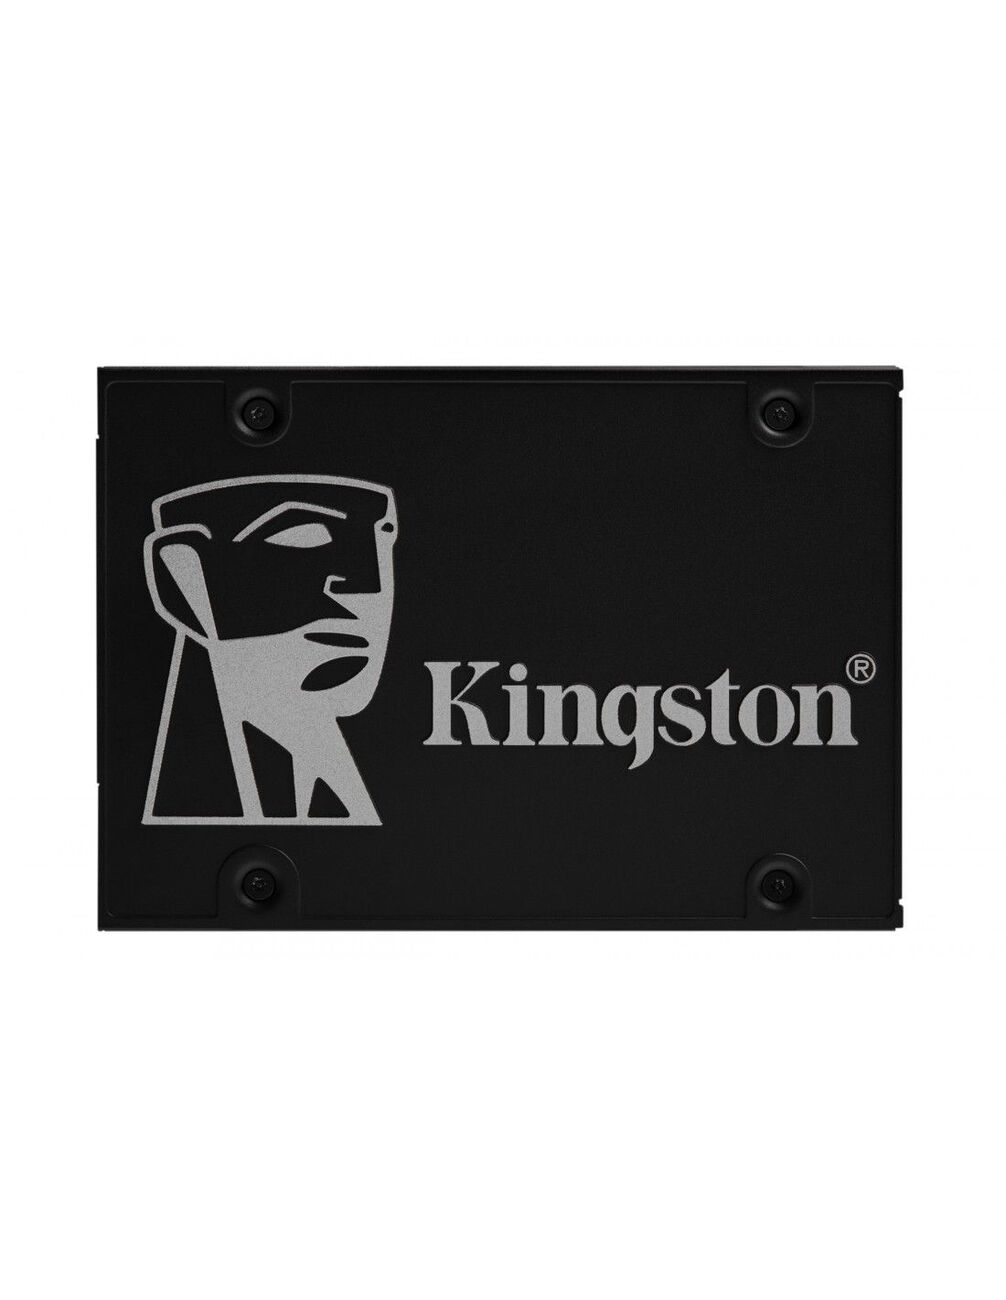 KINGSTON SSD INTERNO KC600 CRITTOGRAFATO 1TB 2.5 SATA 6GB/S KINGSTON